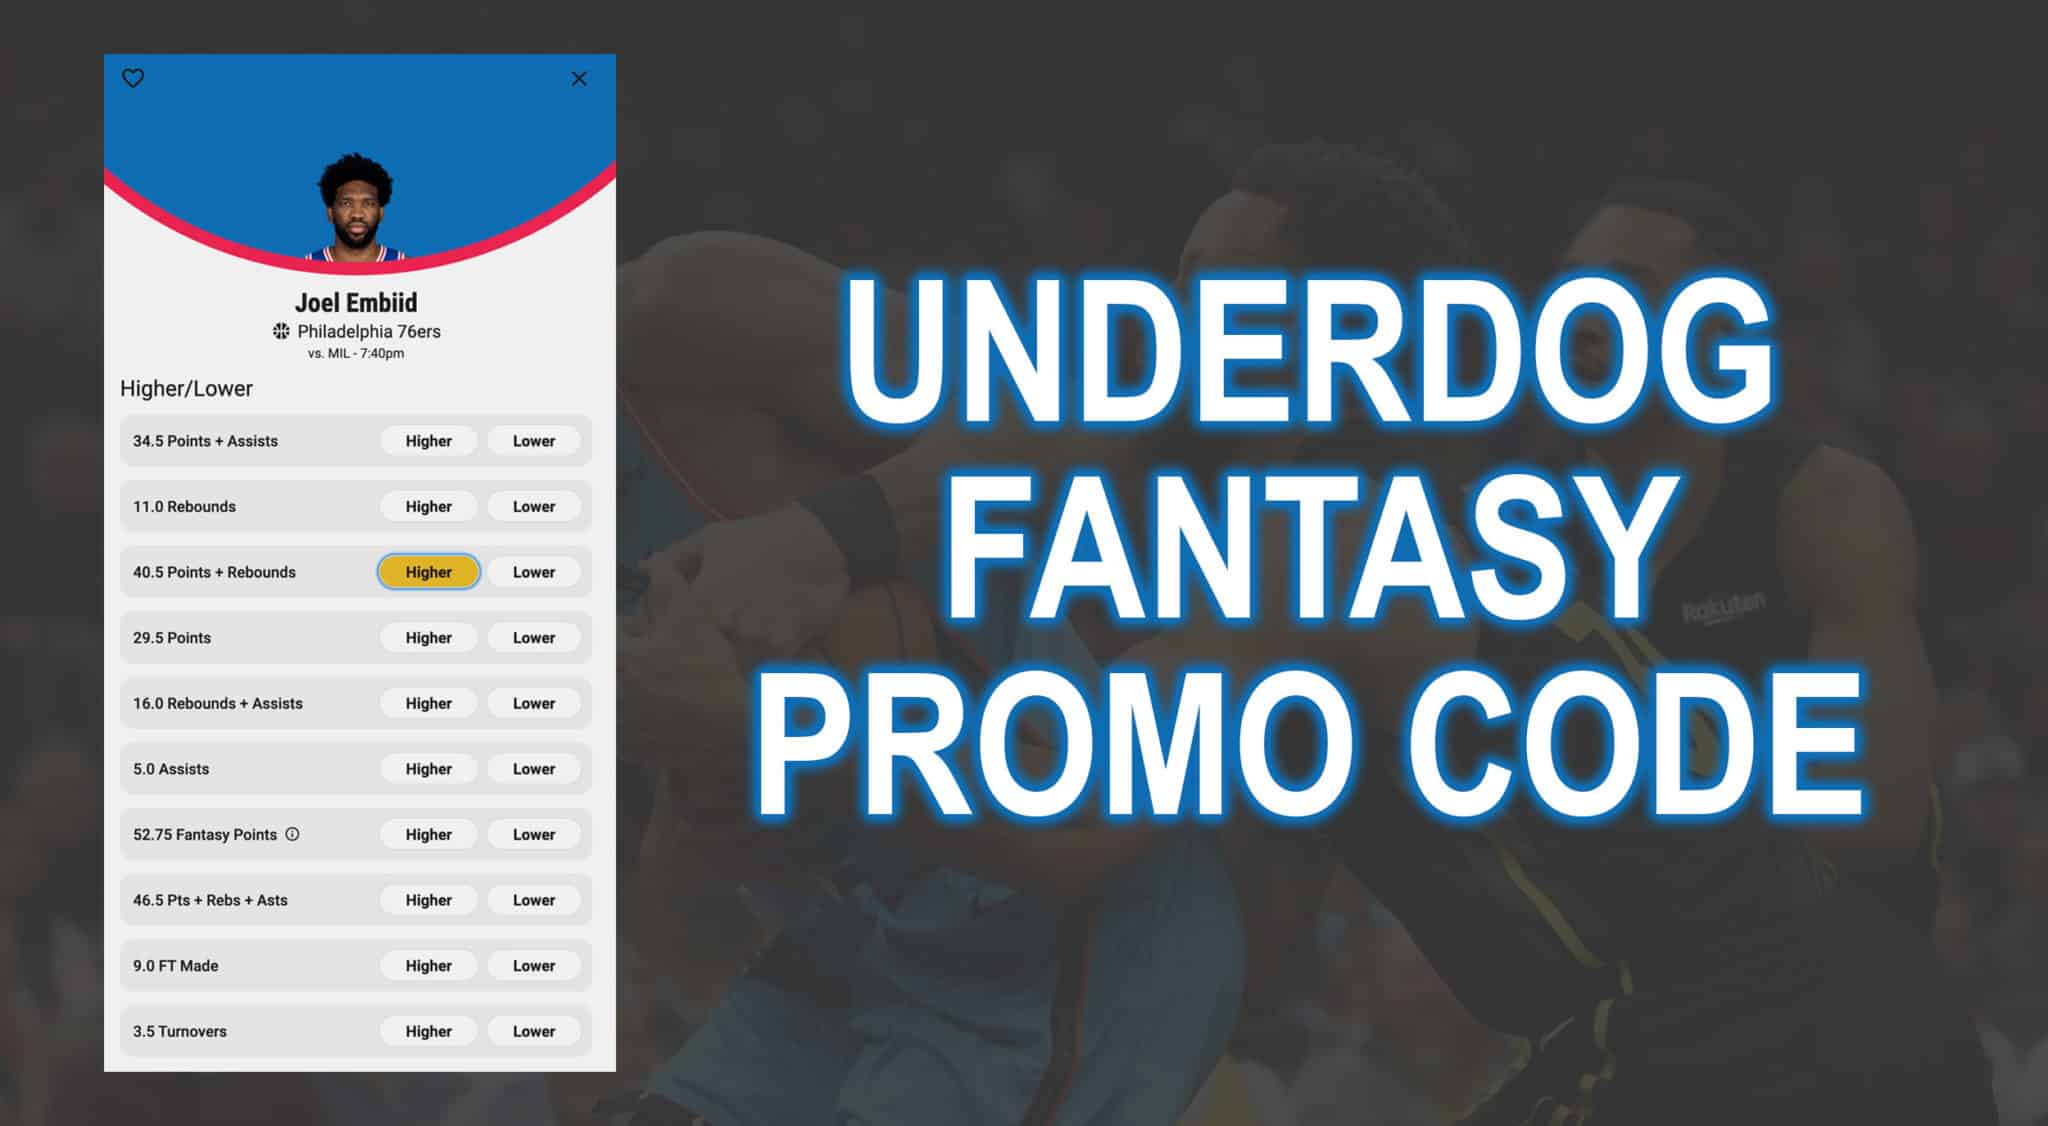 Underdog Fantasy Promo Code: Get $100 In Value Ahead of 76ers vs. Bucks